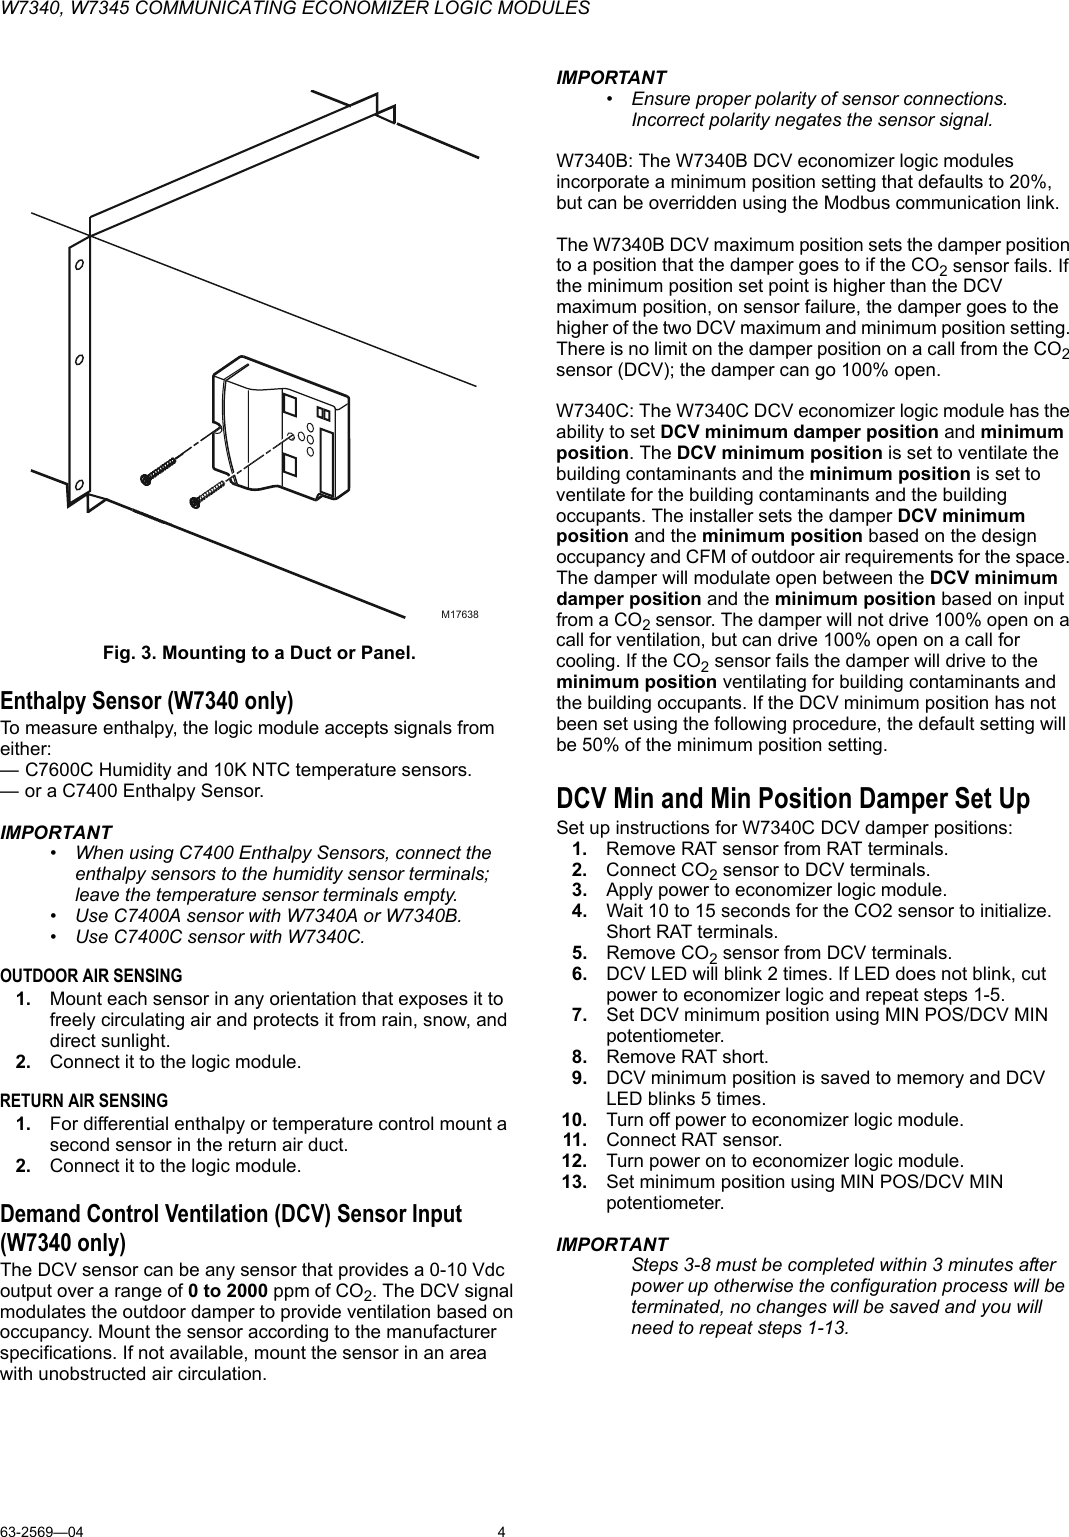 Page 4 of 12 - Honeywell Honeywell-W7340-Users-Manual- 63-2569-4 - W7340, W7345 Communicating Economizer Logic Modules  Honeywell-w7340-users-manual